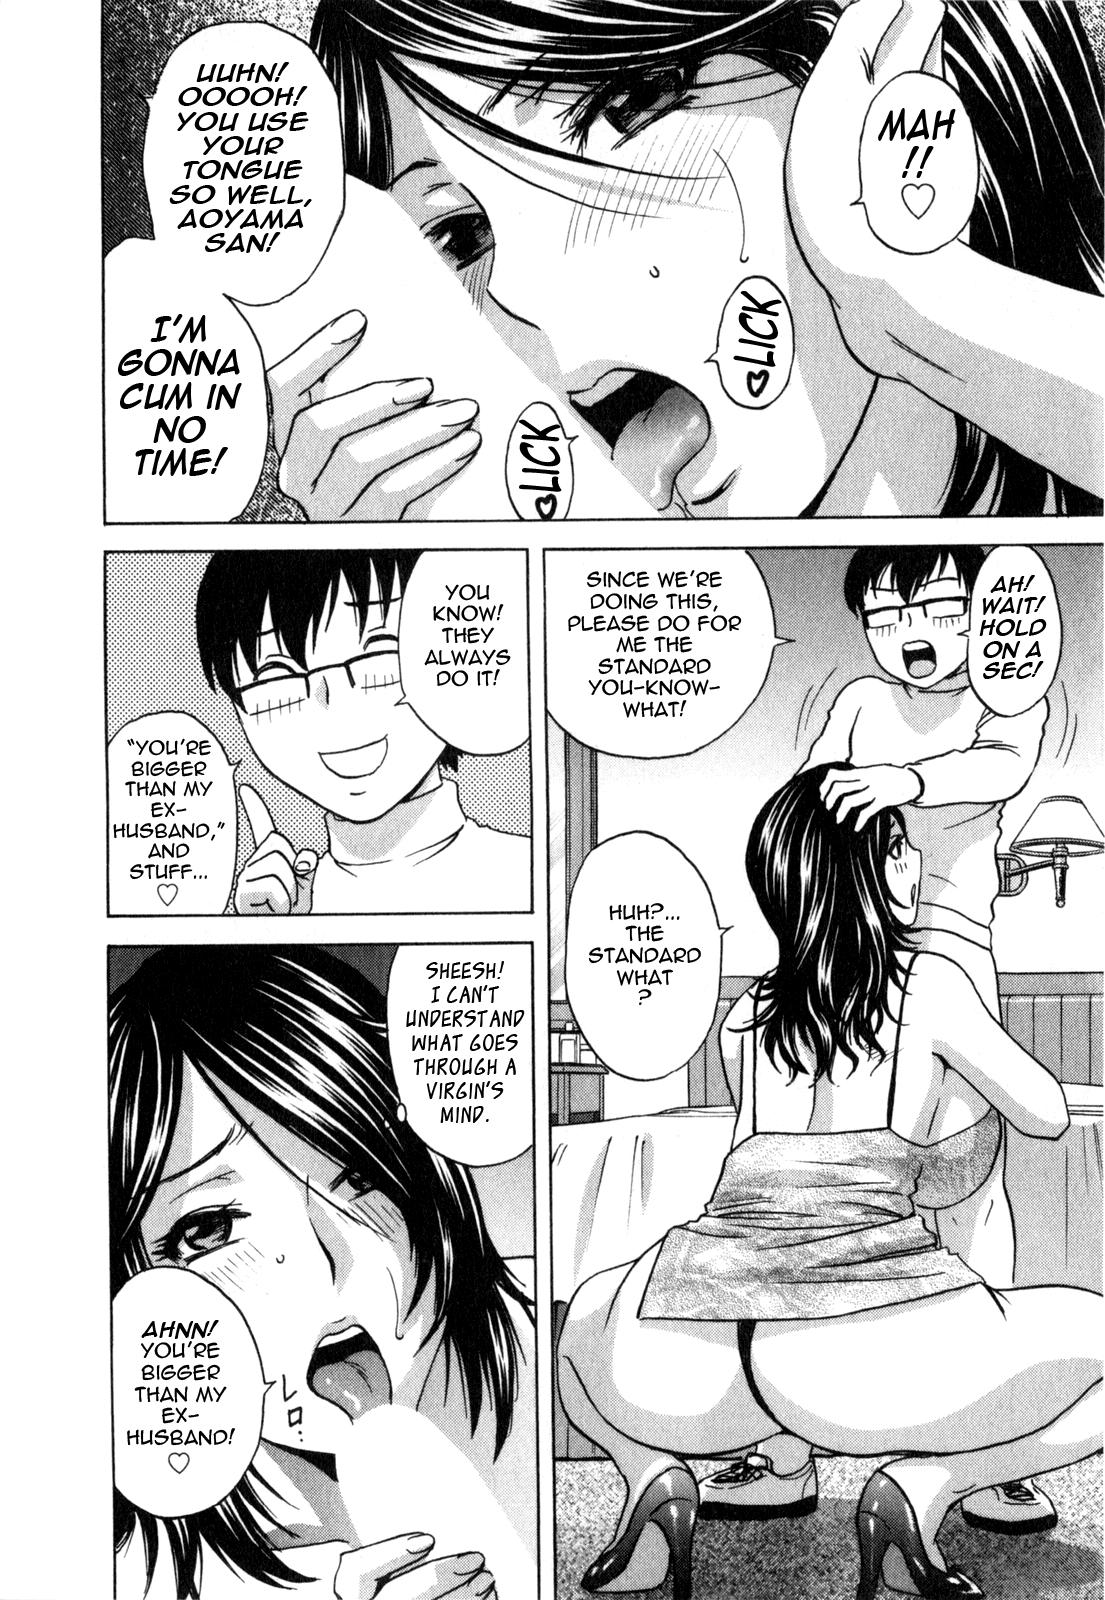 [Hidemaru] Life with Married Women Just Like a Manga 3 - Ch. 1-7 [English] {Tadanohito} 55